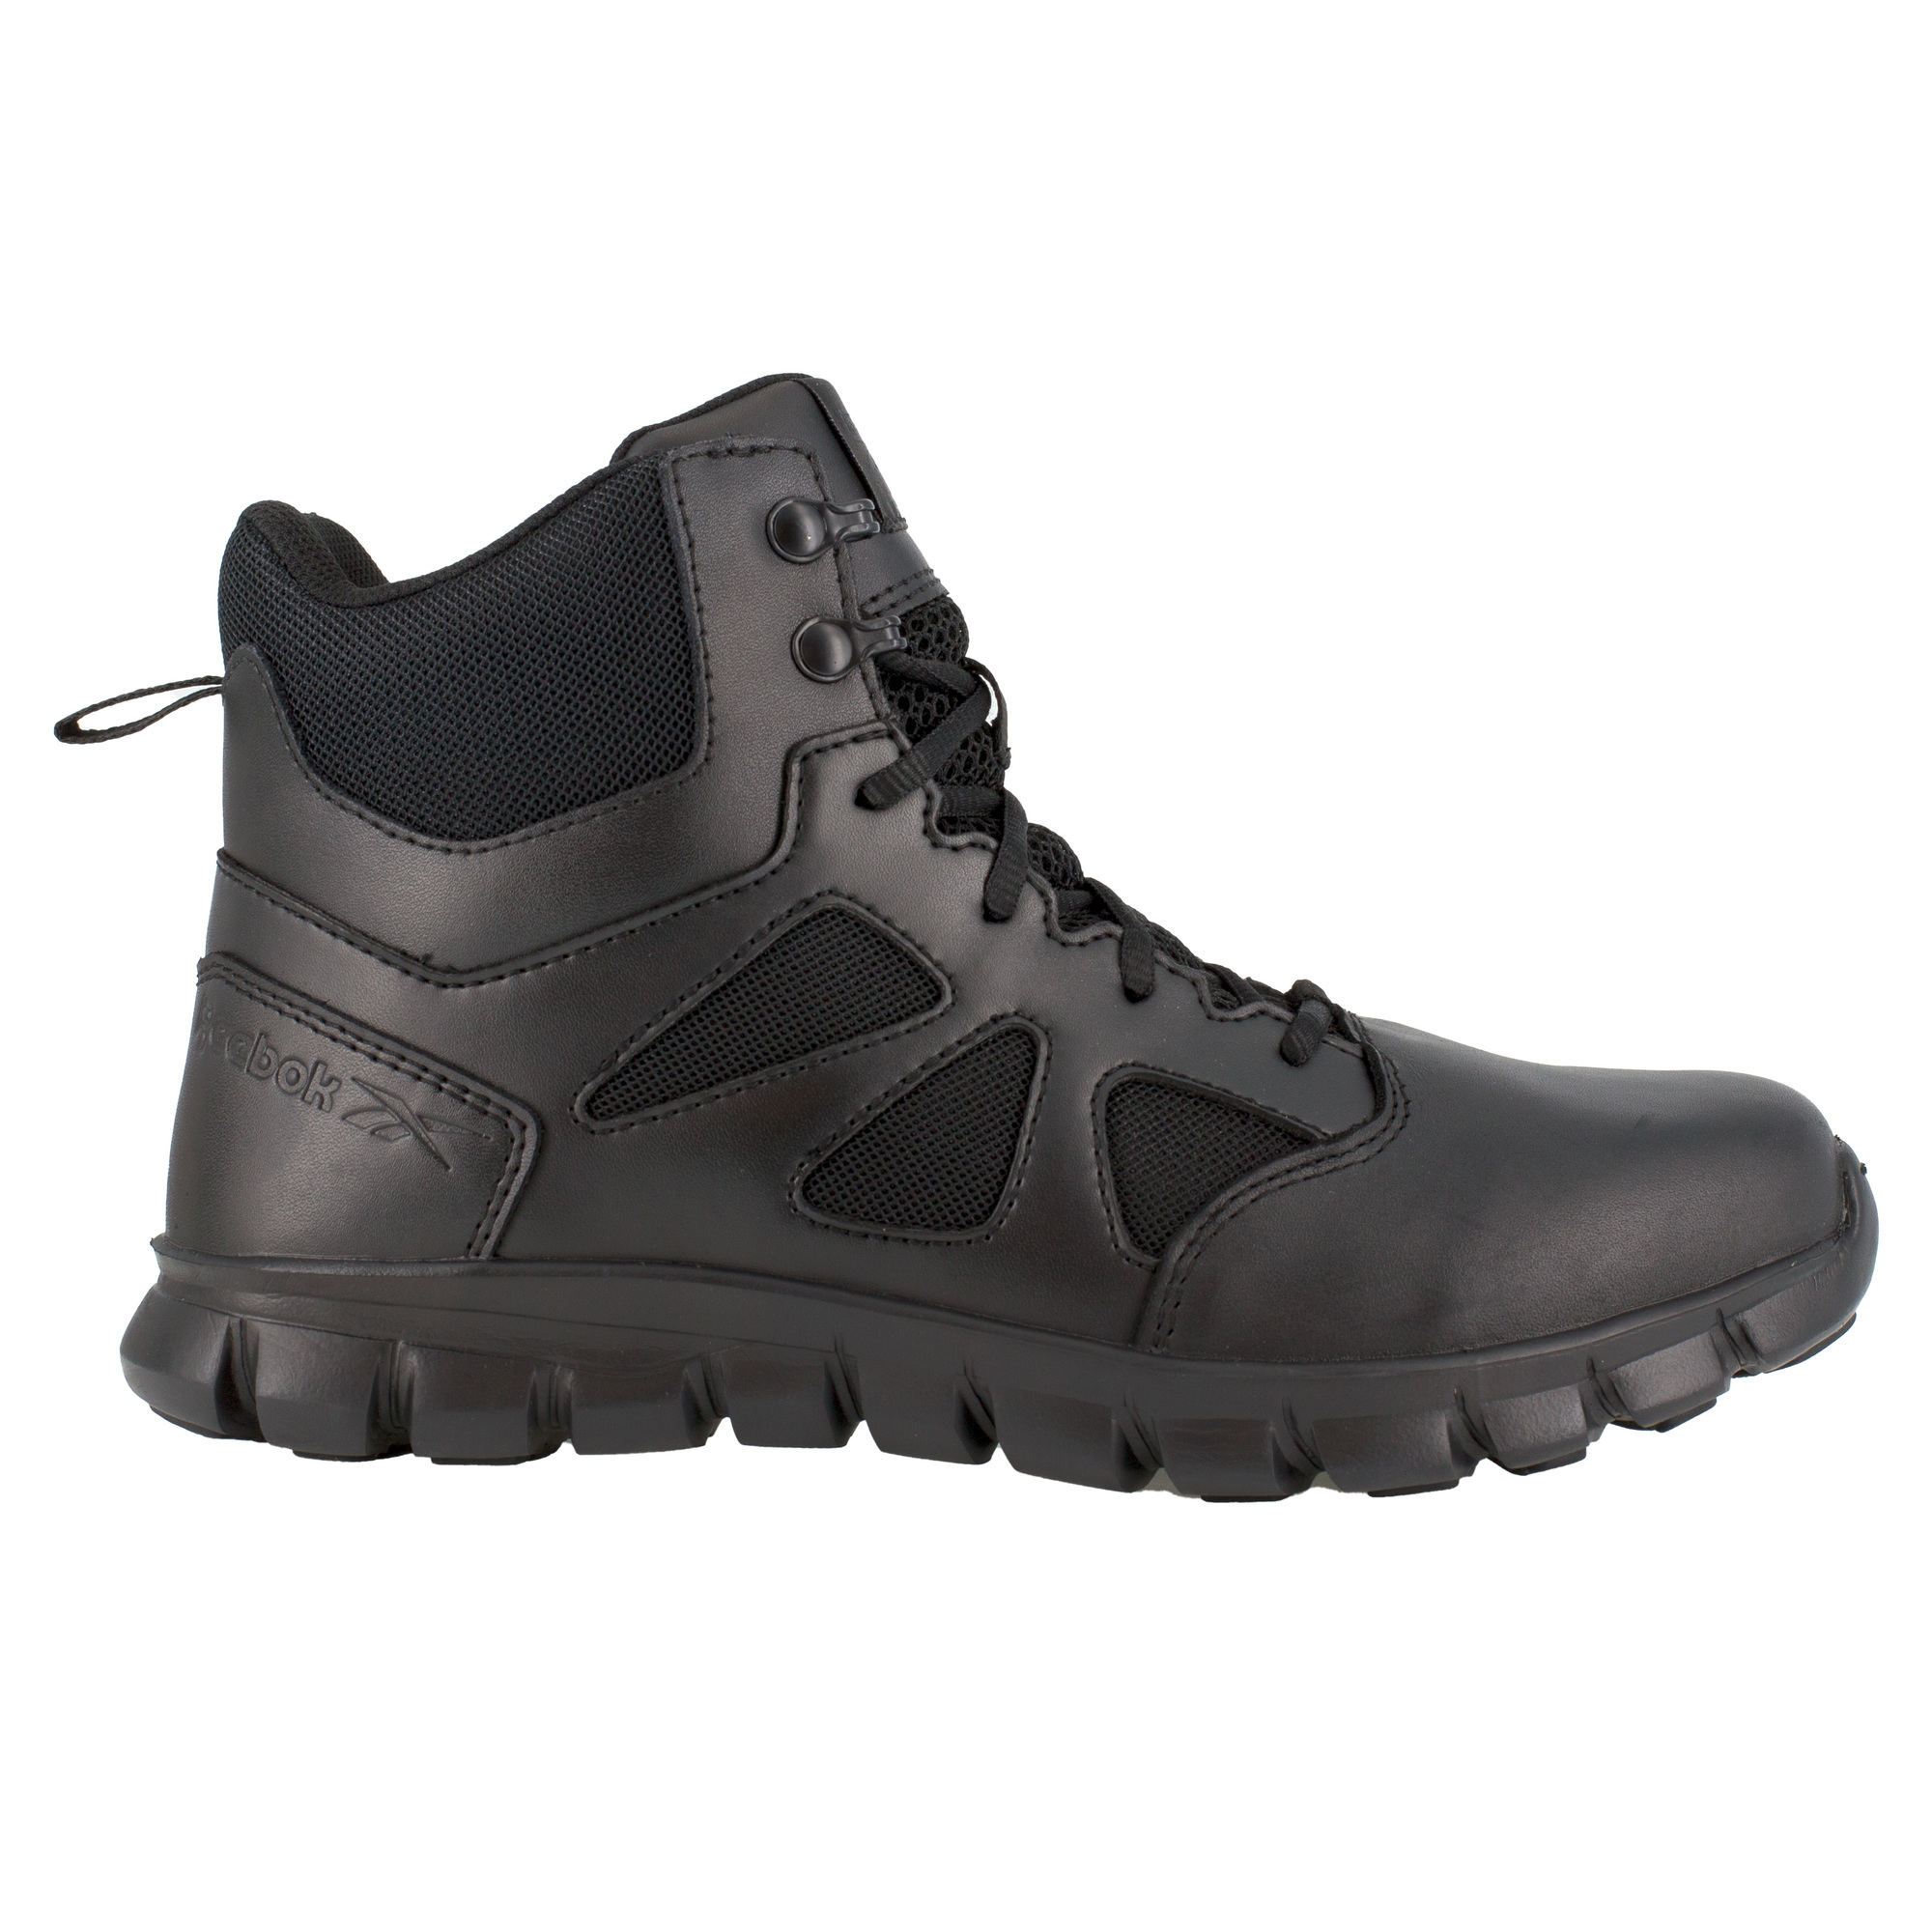 Reebok, 6Inch Tactical Boot w/Side Zipper, Size 12, Width Medium, Color Black, Model RB086